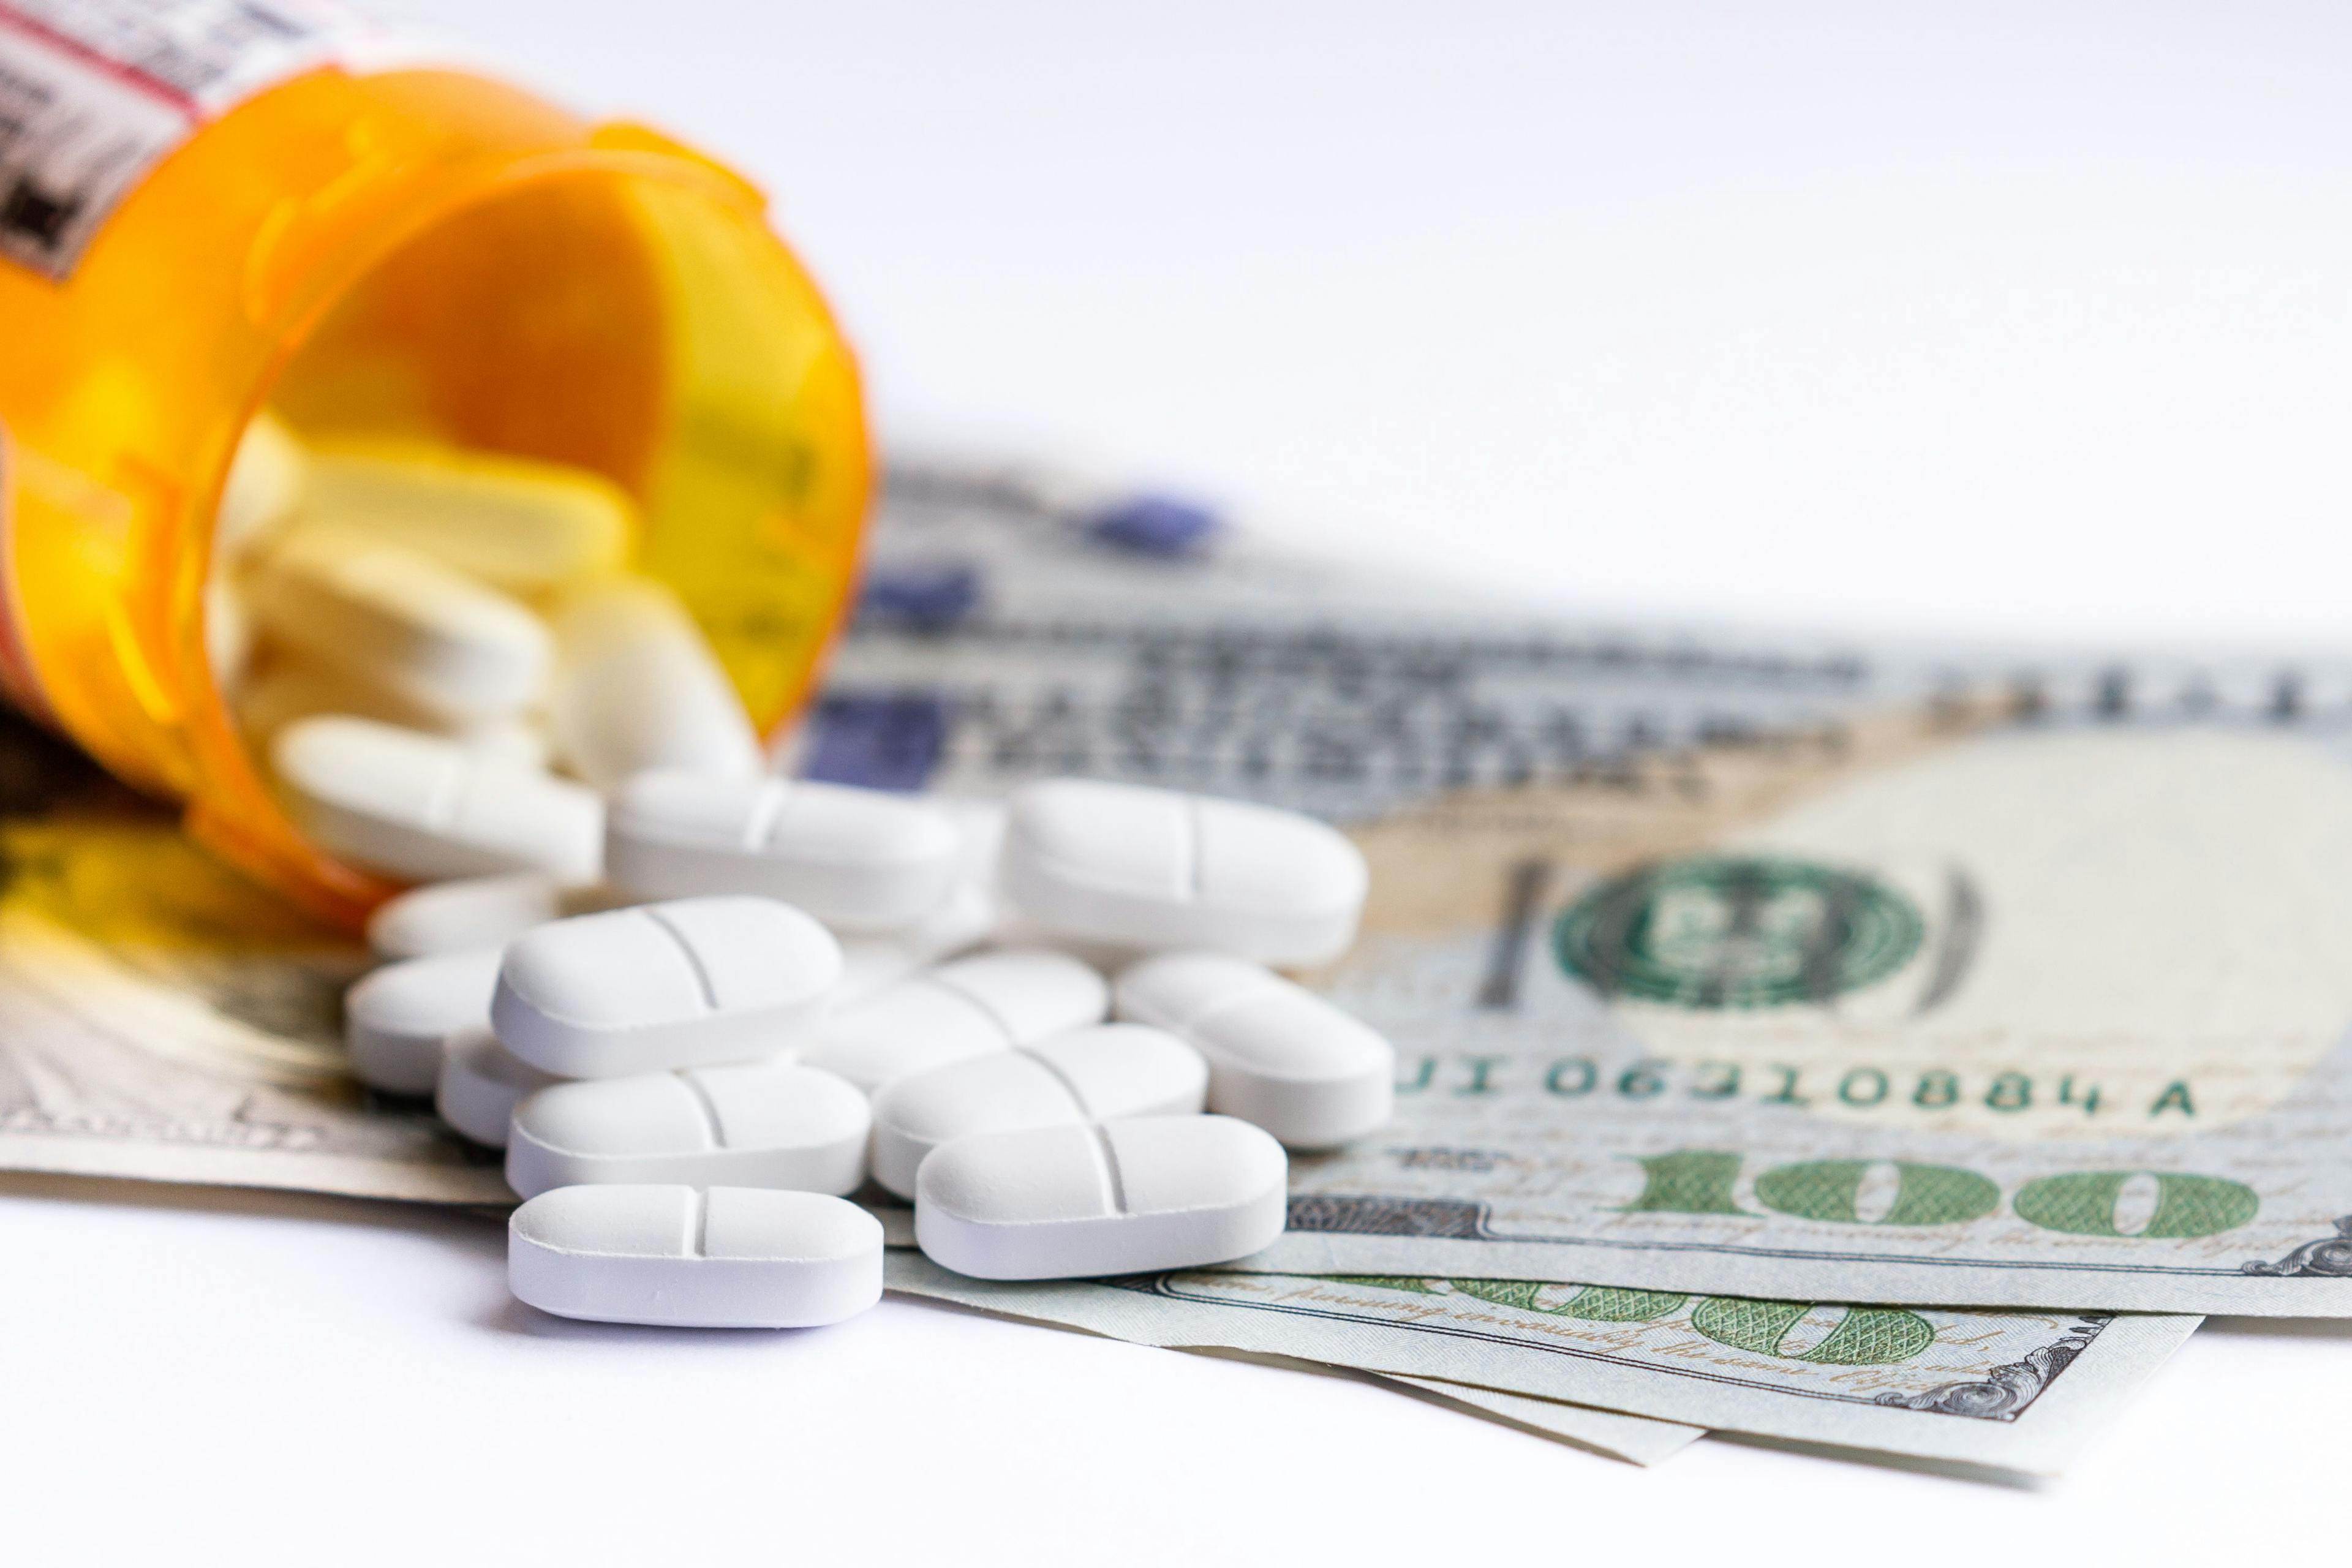 Hospital Group Assails AHIP’s Drug Price Report